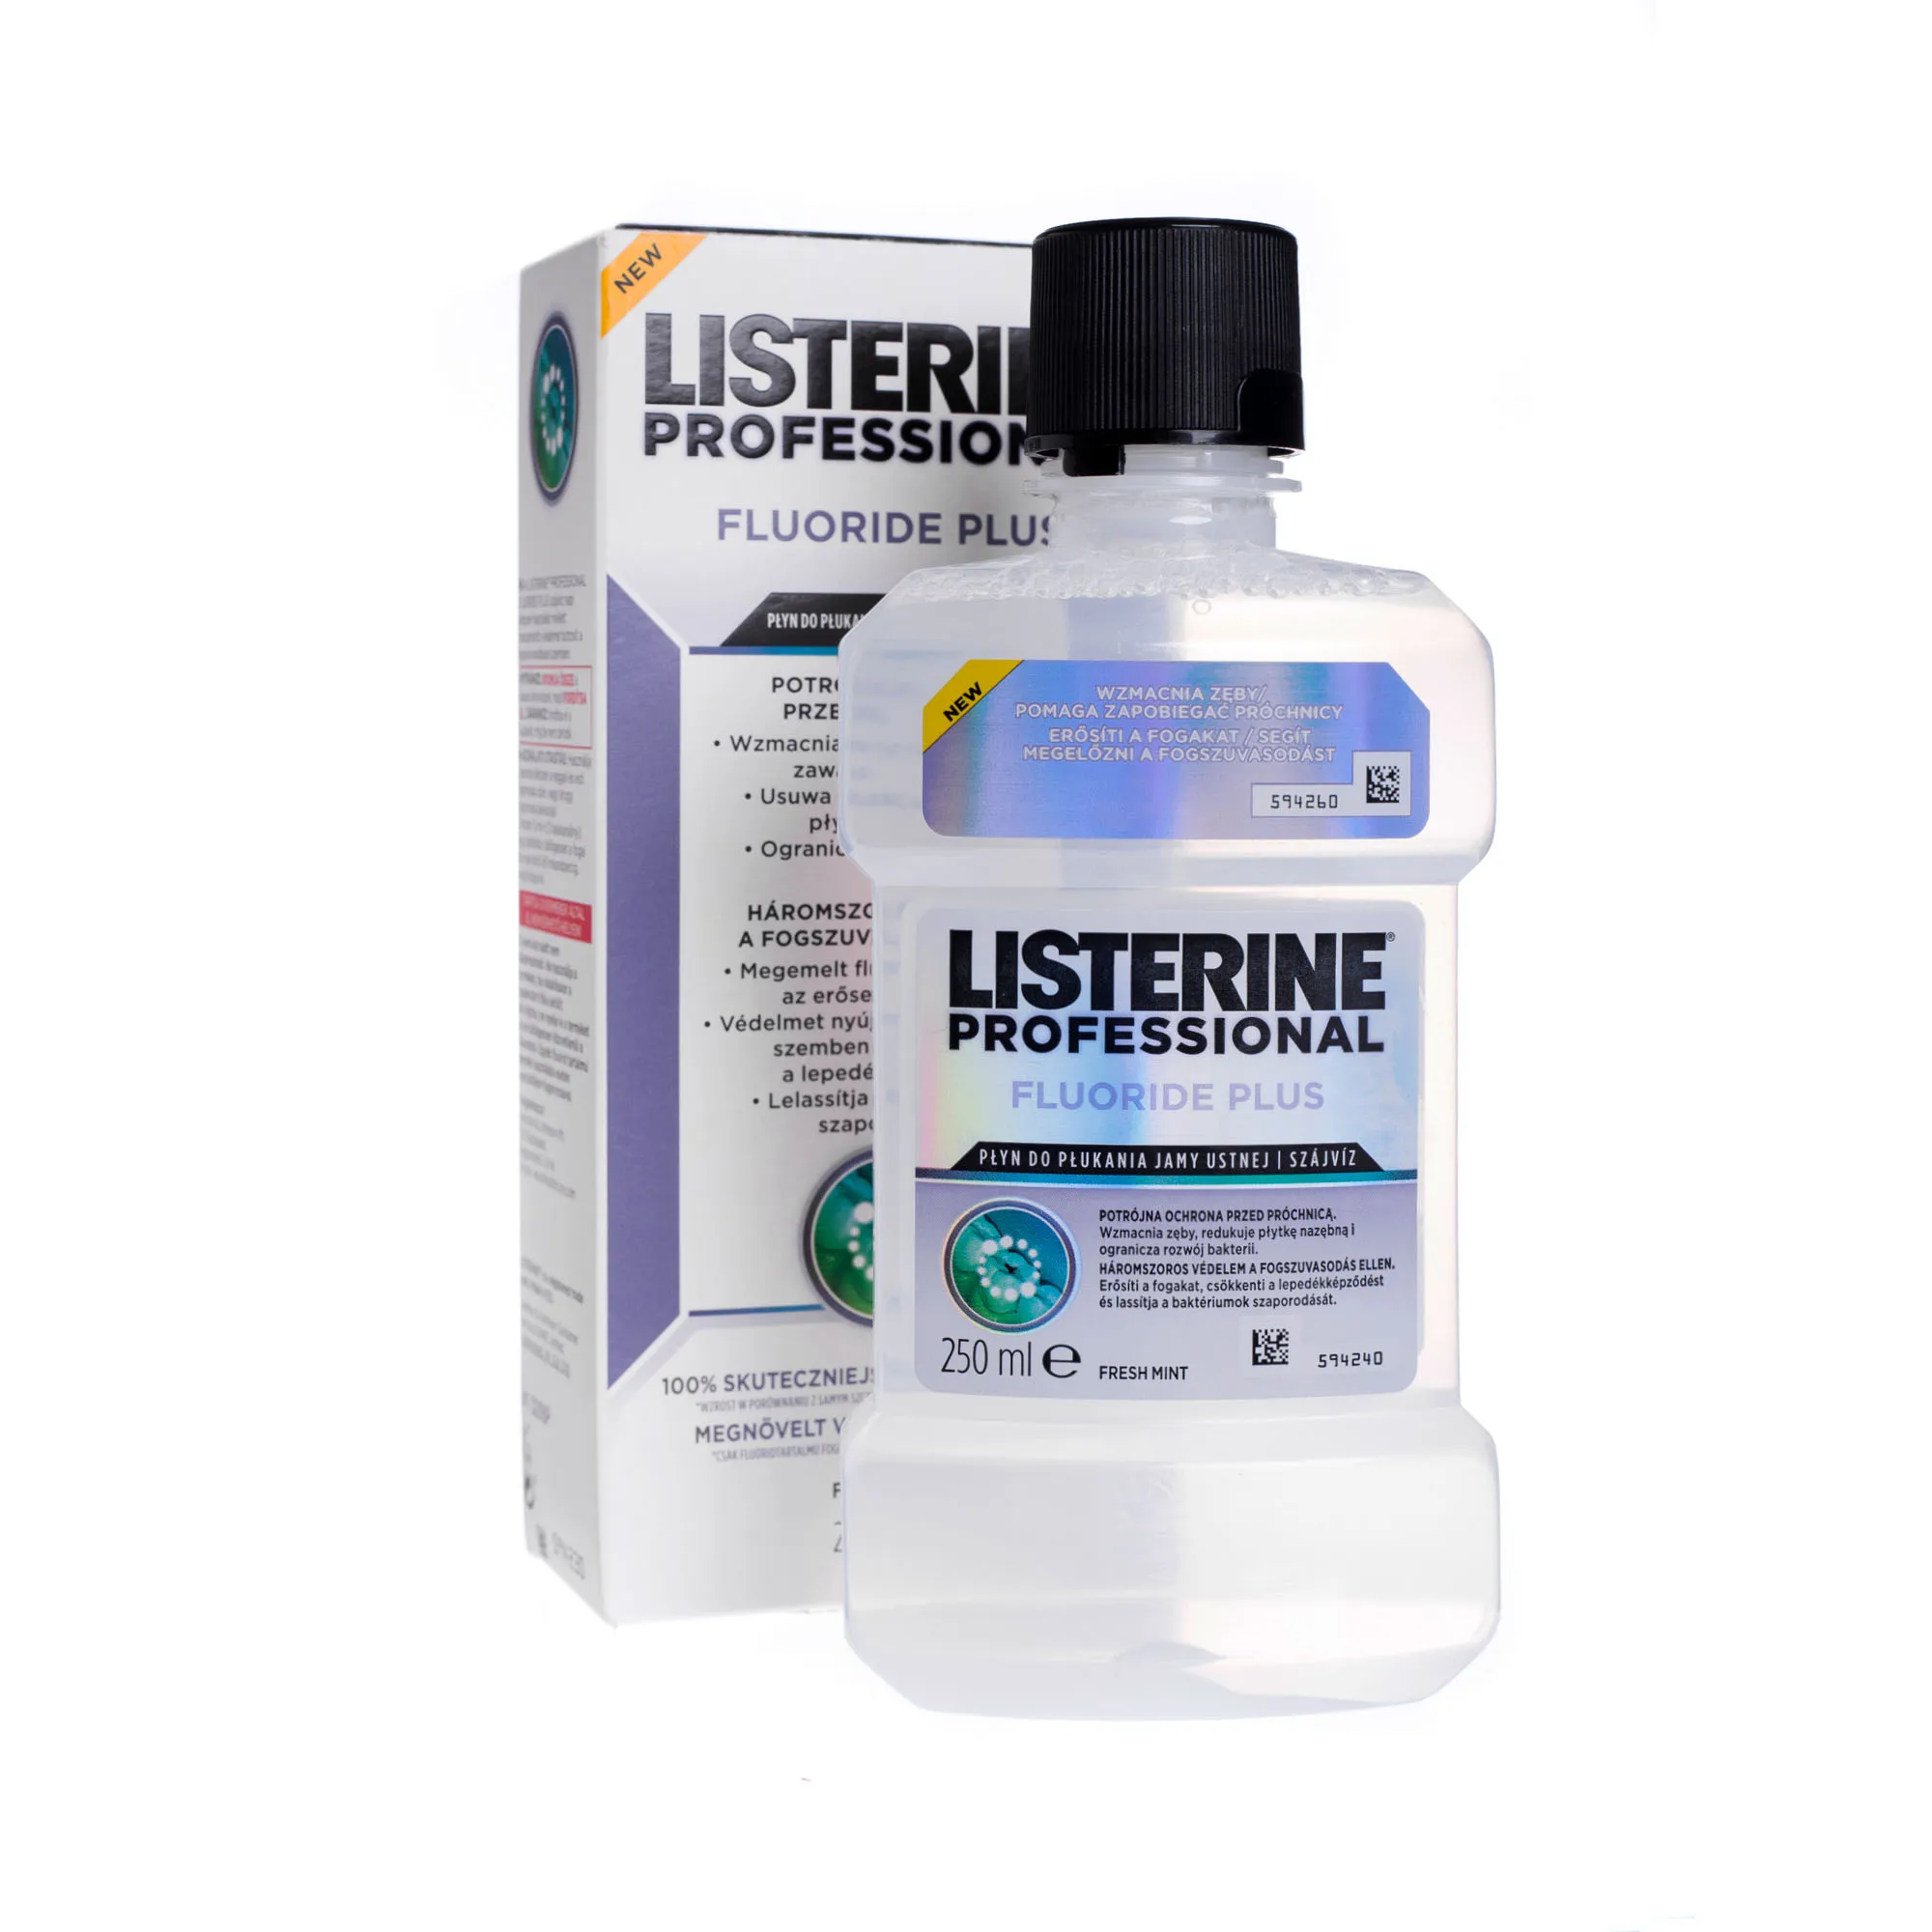 Listerine Professional Fluoride Plus, 250 ml 